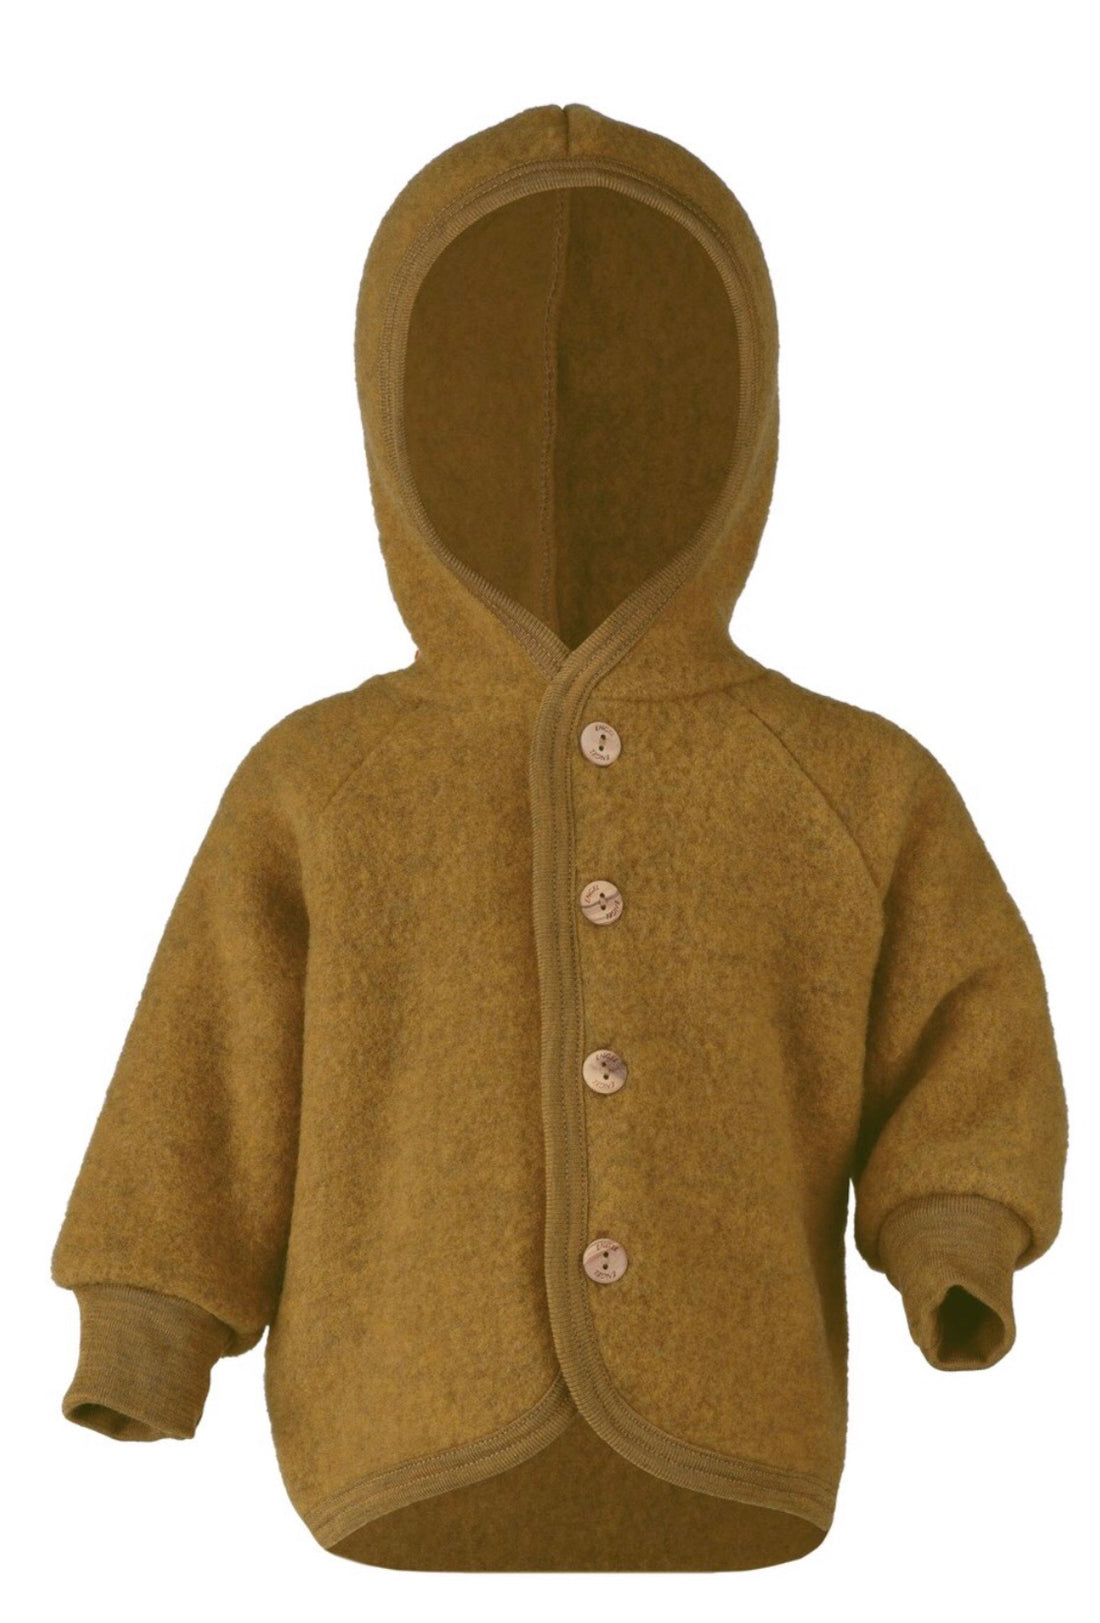 Engel Natur Hooded Jacket in Merino Wool- Saffron